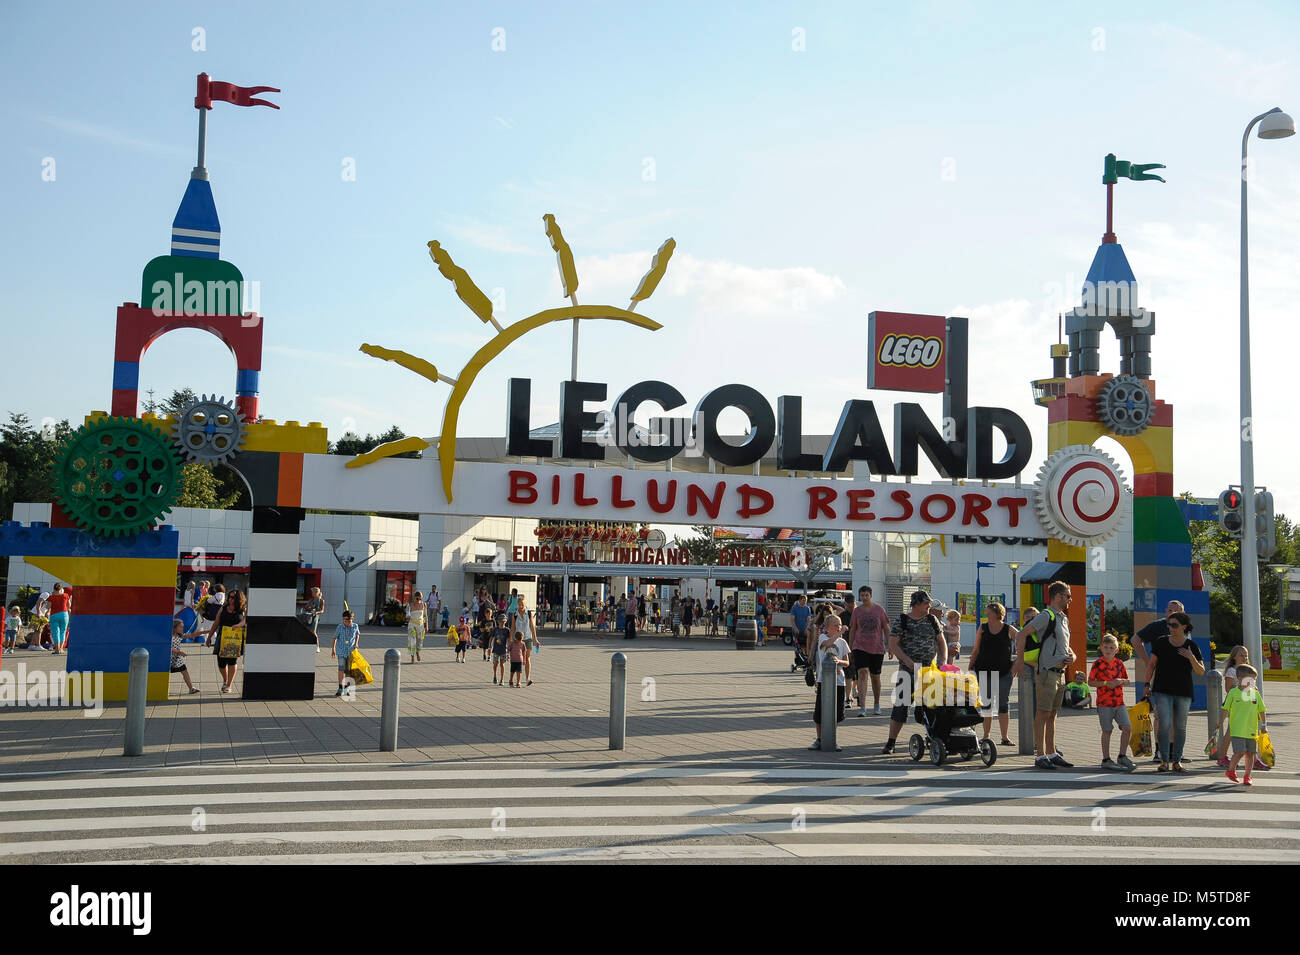 Legoland Billund Resort High Resolution Stock Photography and Images - Alamy